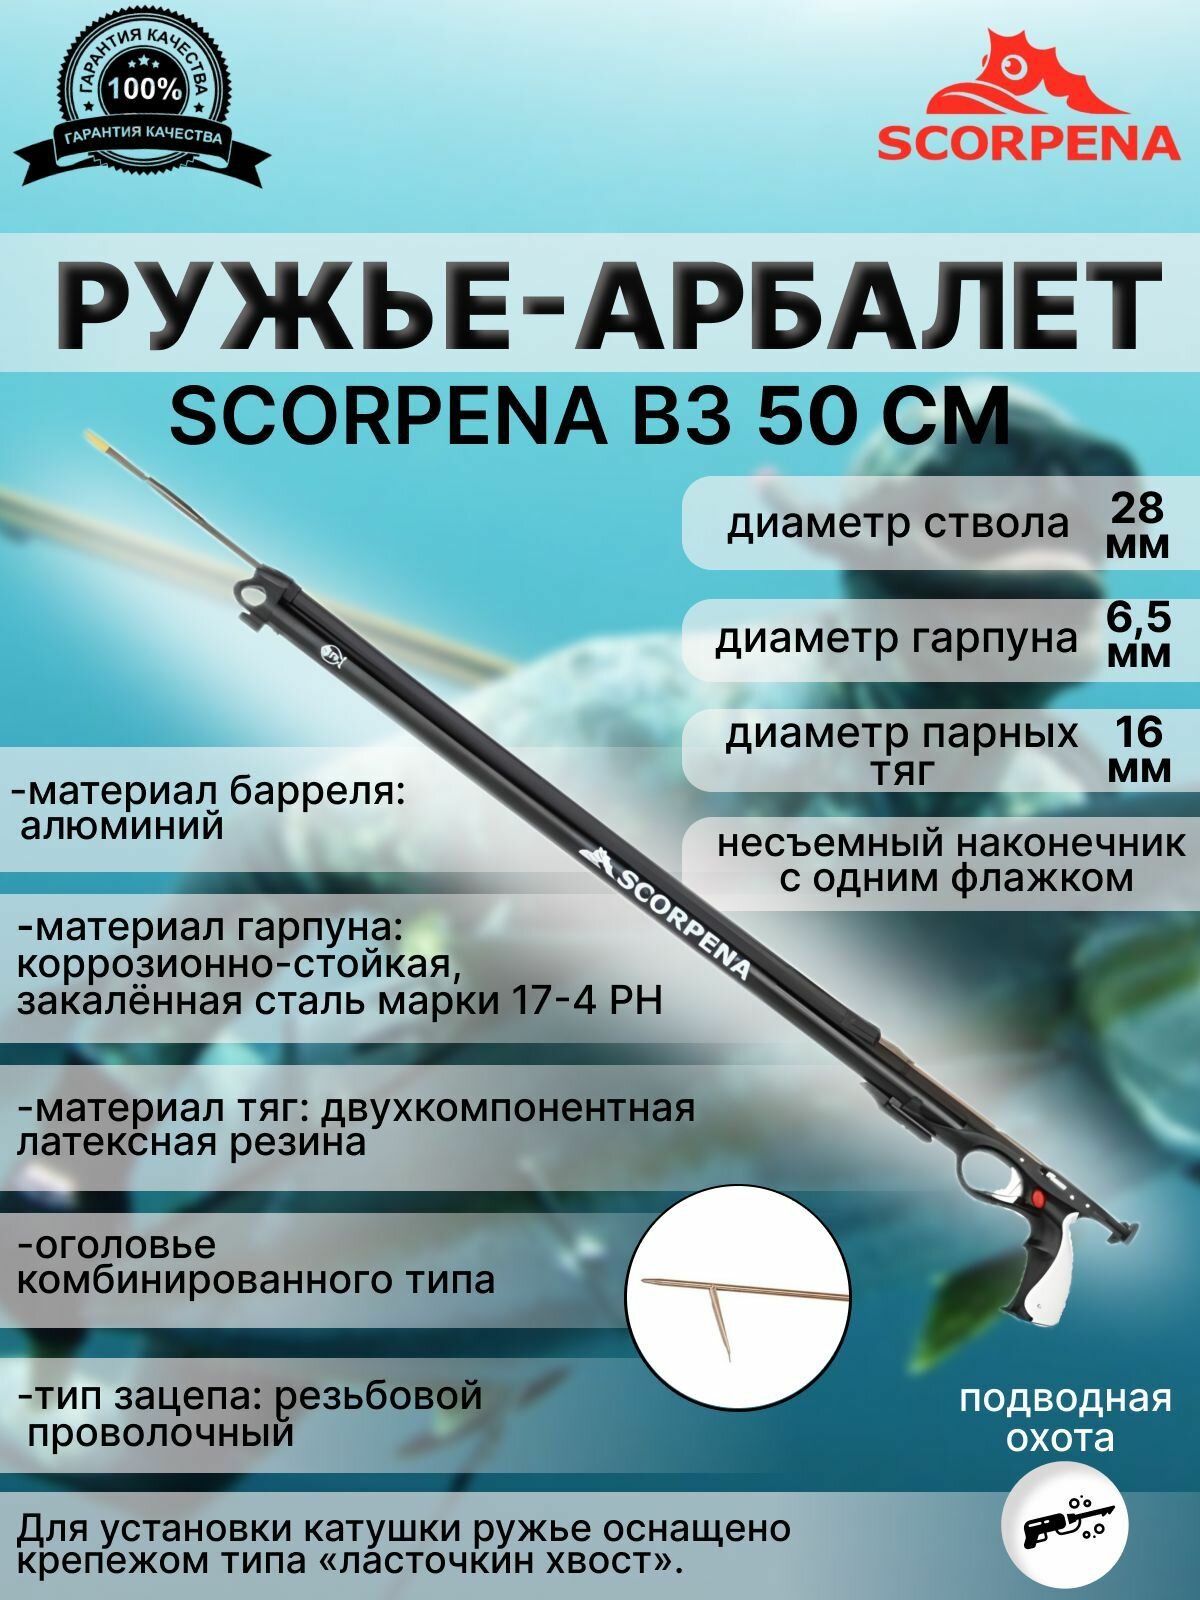 Ружьё-арбалет Scorpena B3 50